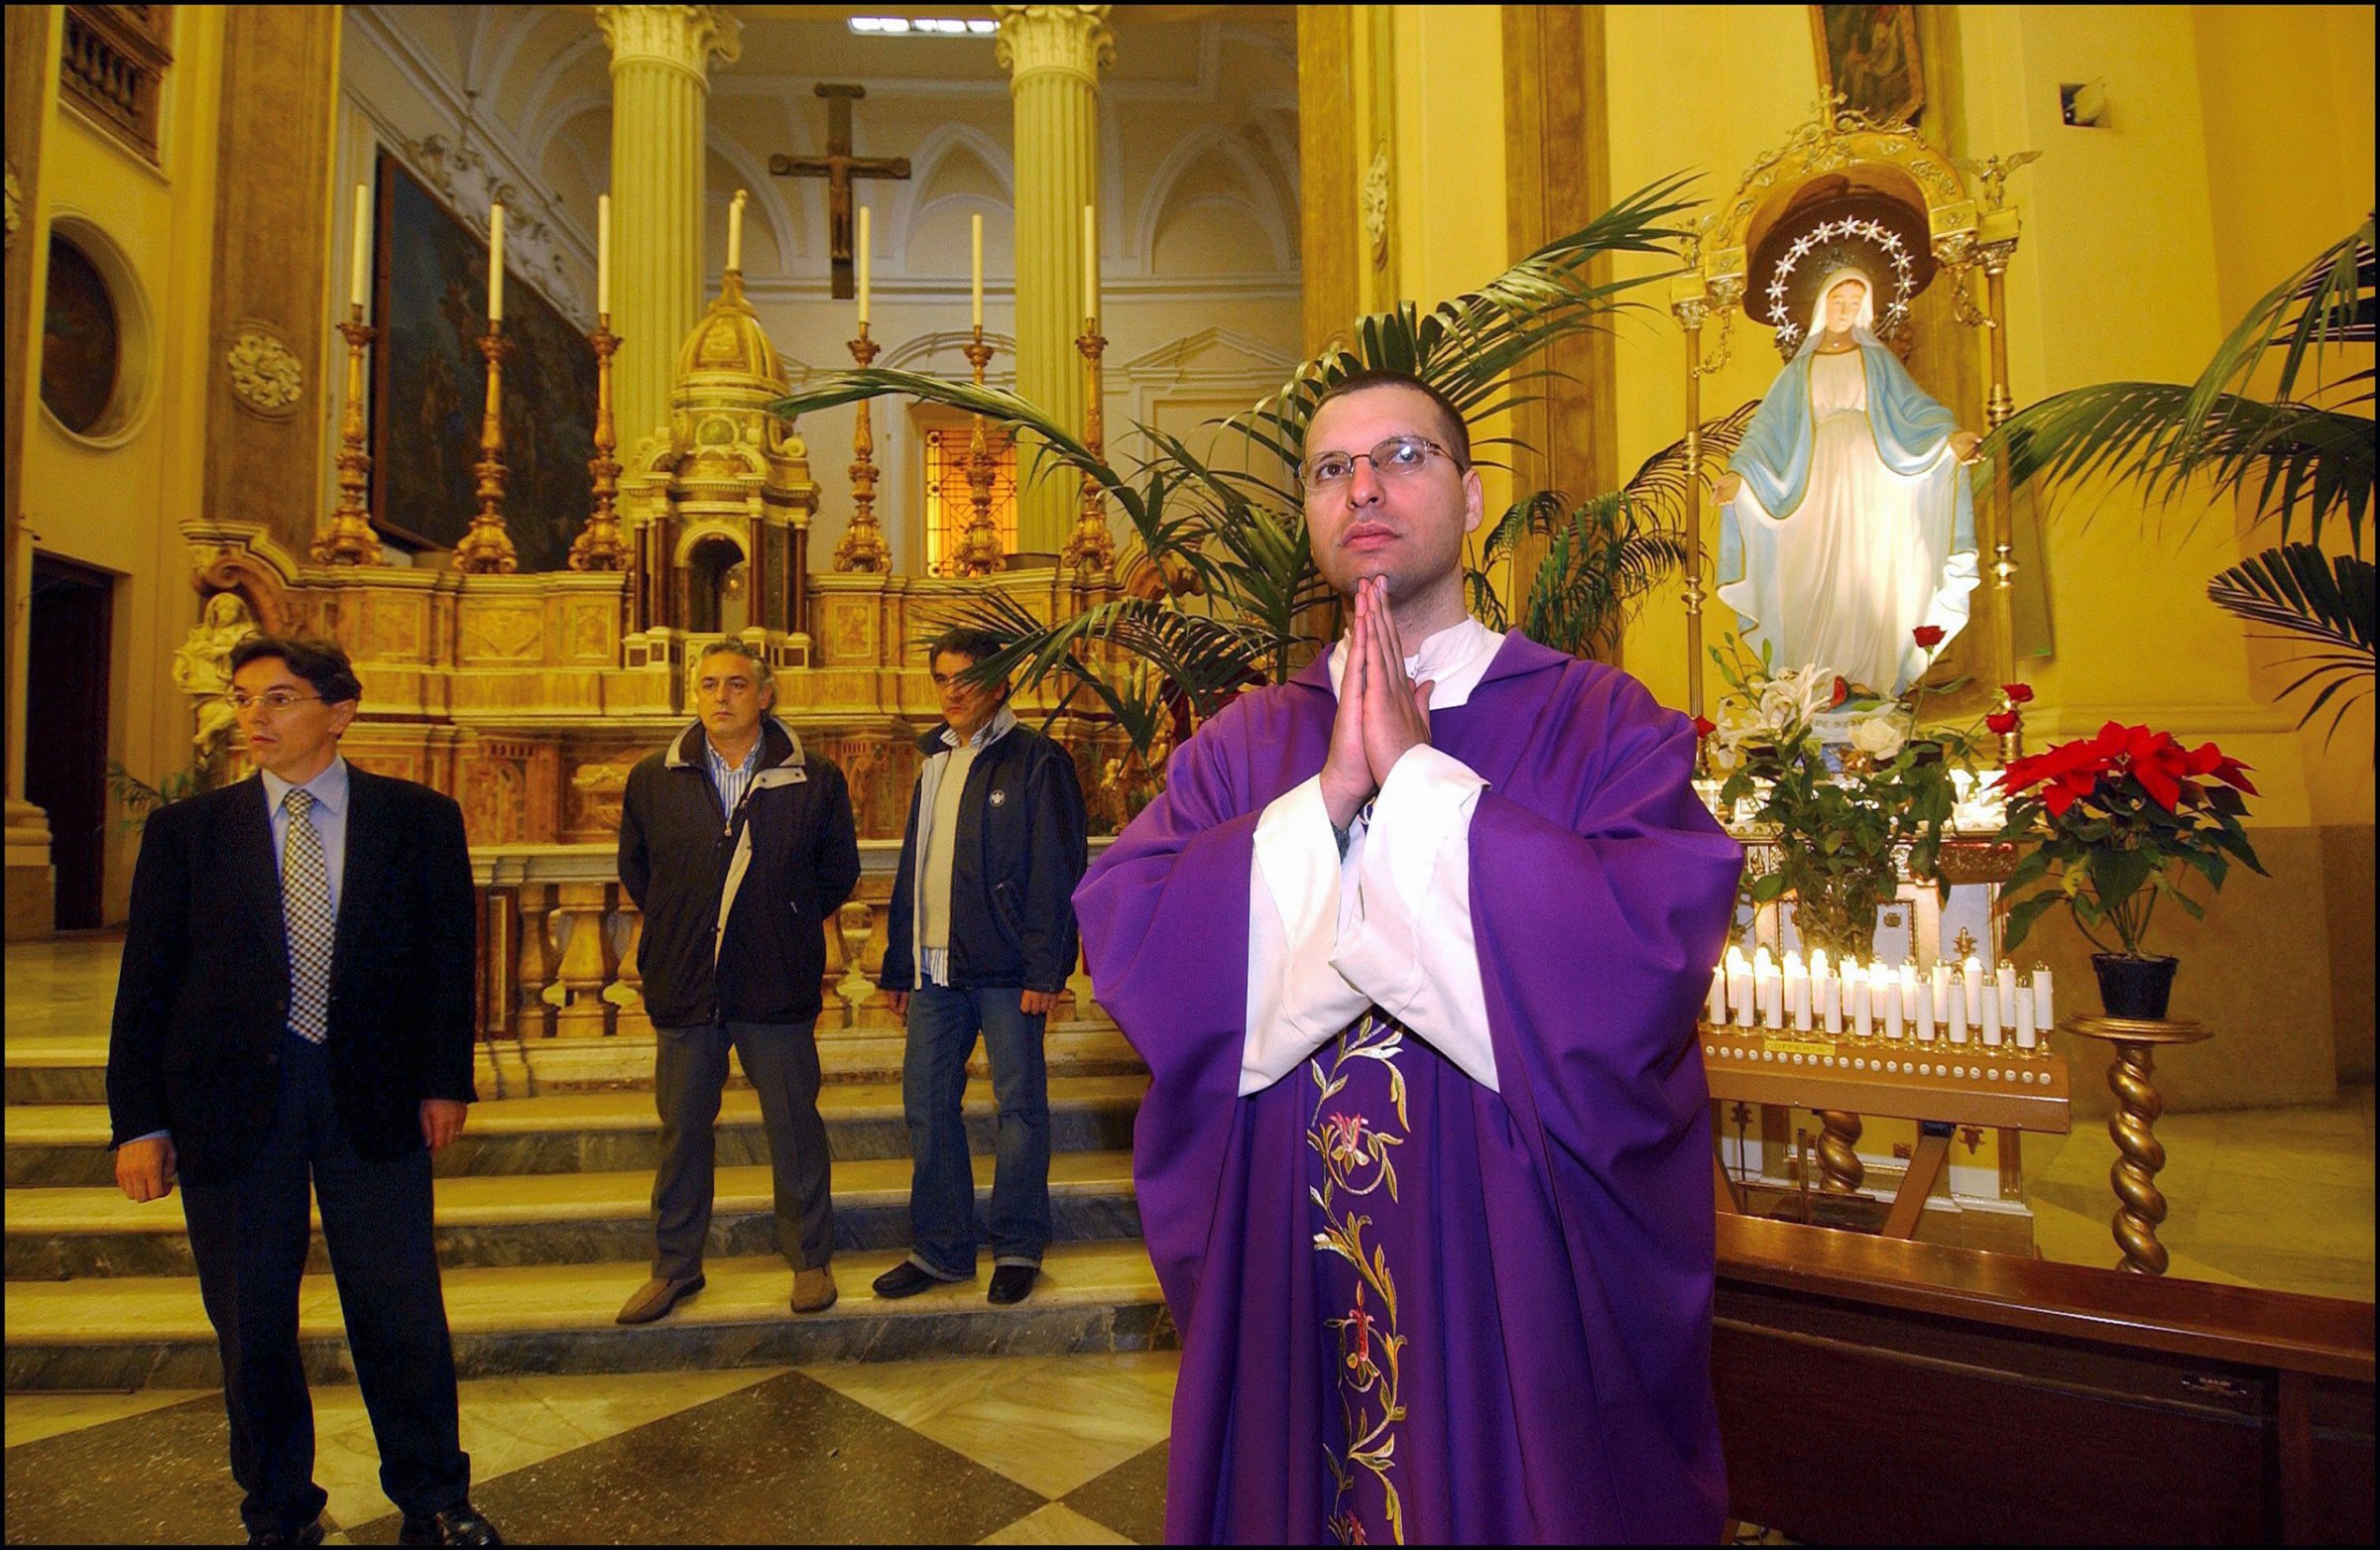 Don Luigi Merola and his three bodyguards before Mass at San Giorgio Maggiore in the heart of Naples, Italy, Dec. 13, 2004.